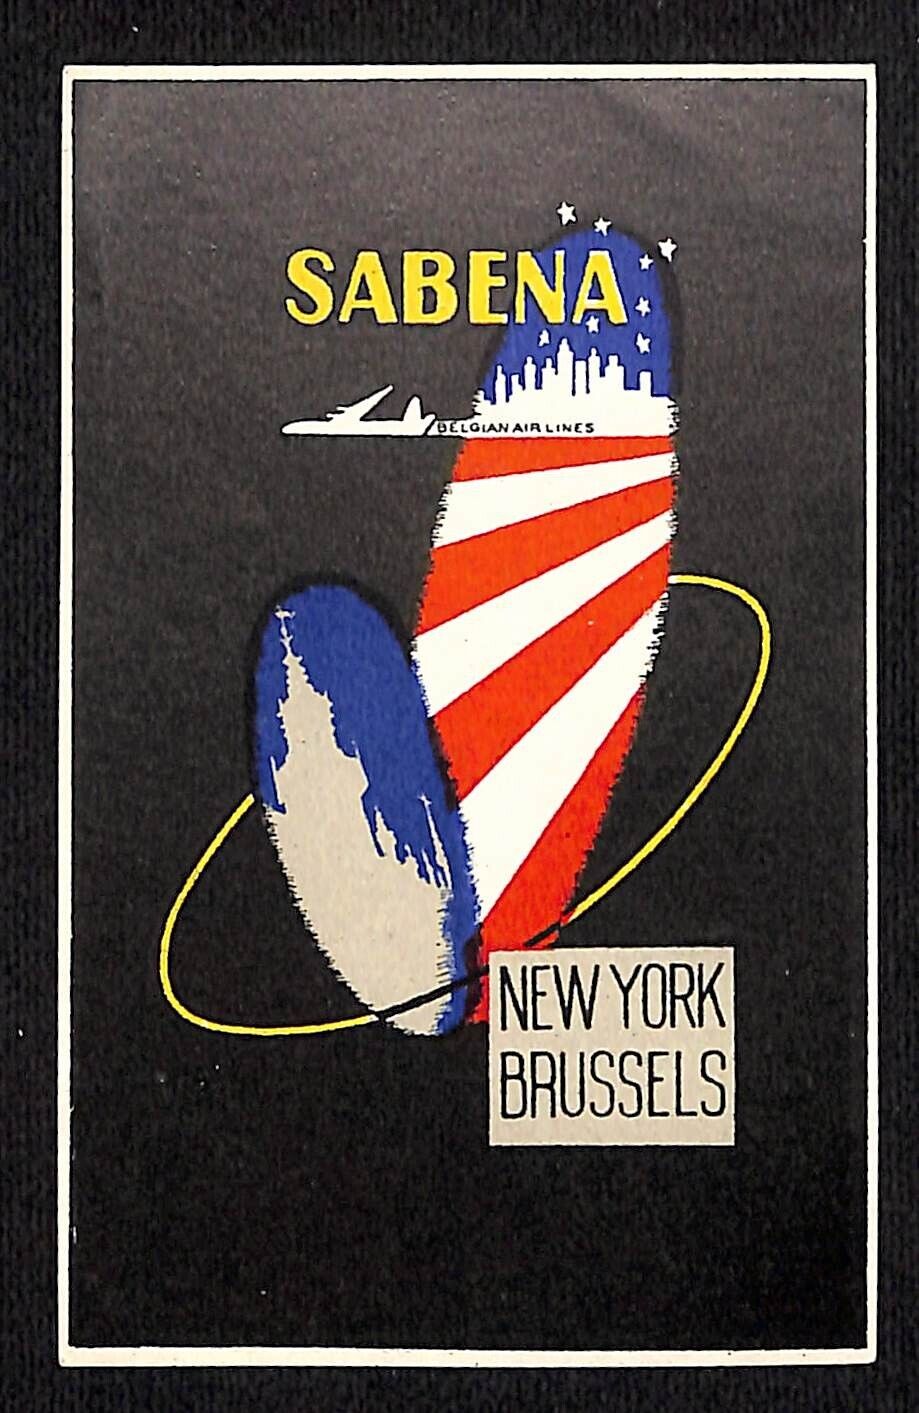 Sabena Belgian Airlines Bruxelles New York Luggage Label w/ Skyline Flag Scarce